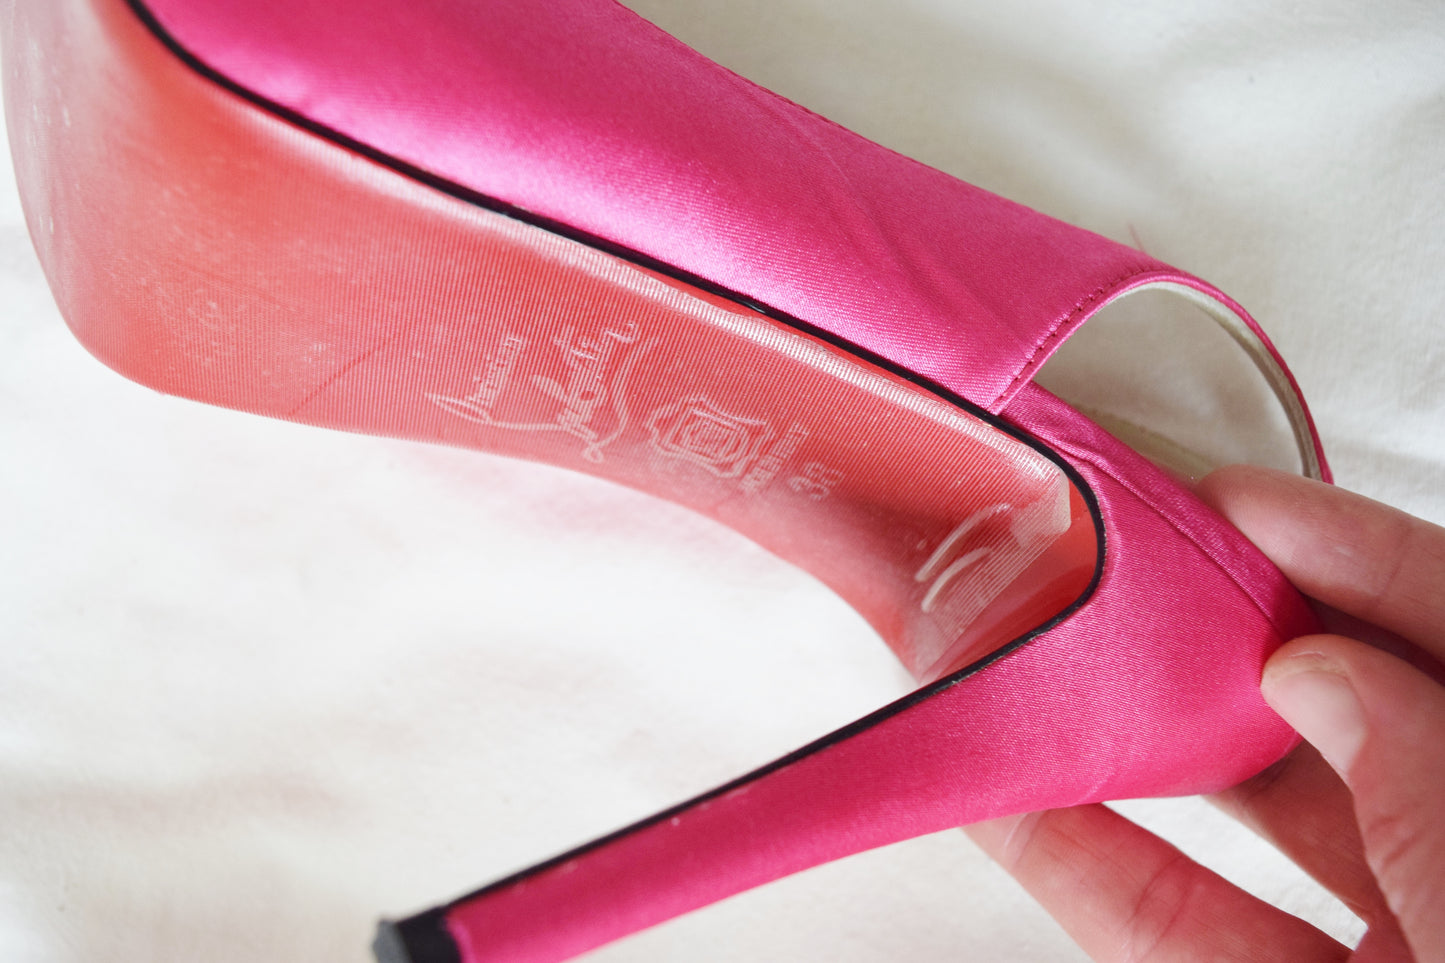 Christian Louboutin Hot Pink Satin 5” Platform Heels | Size 38